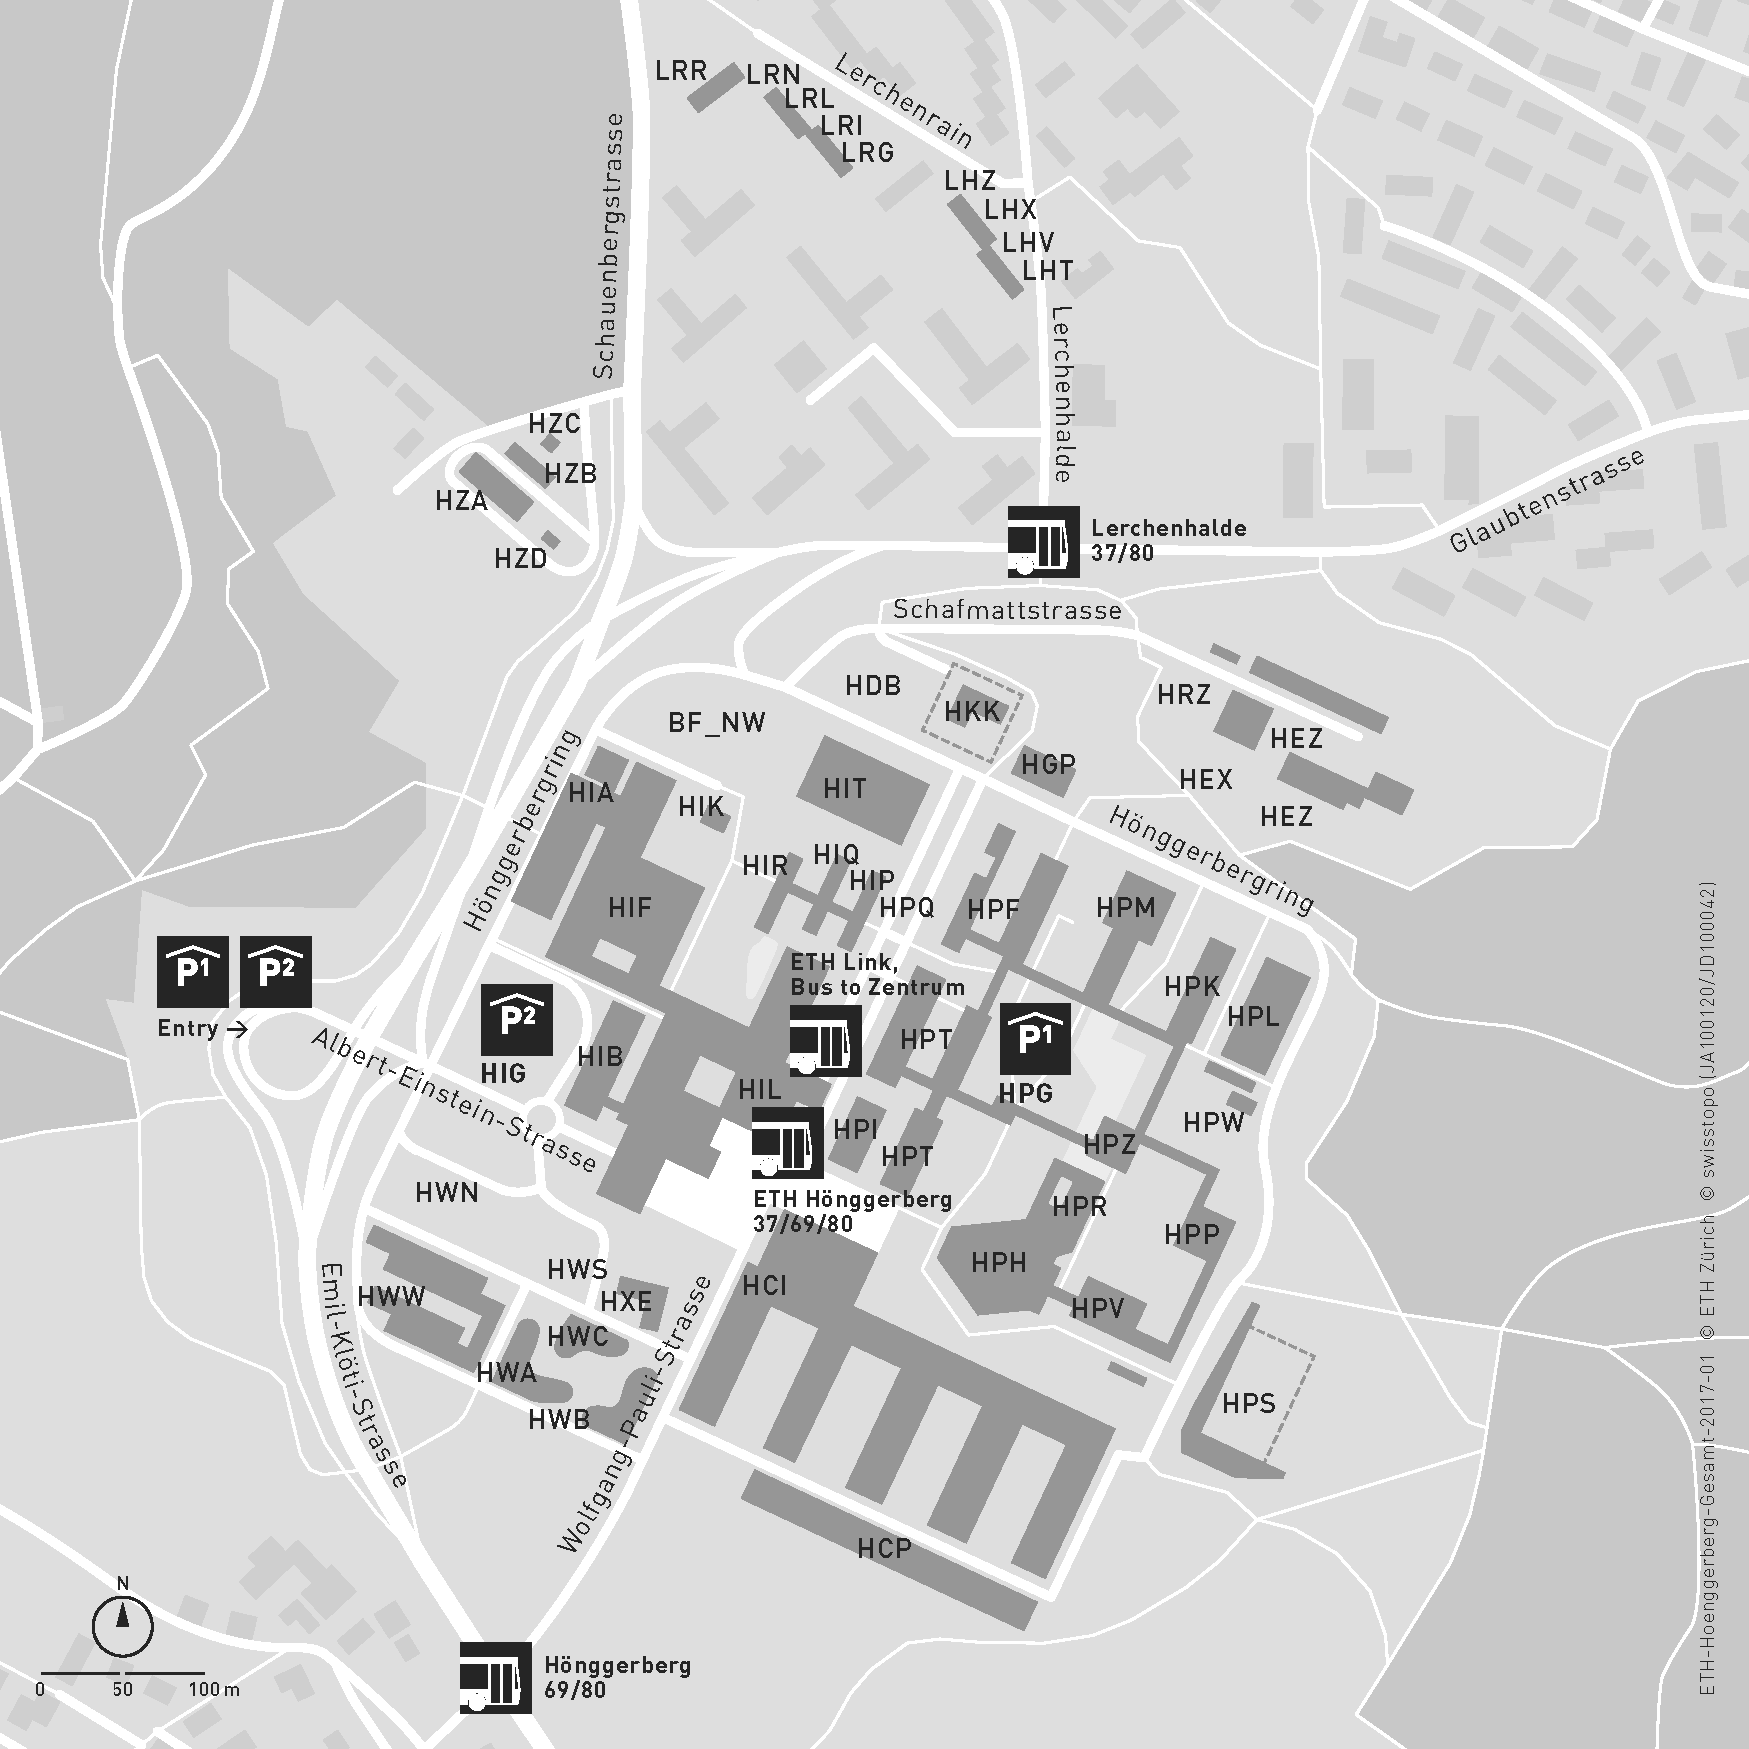 Enlarged view: Map of ETH Campus Hönggerberg